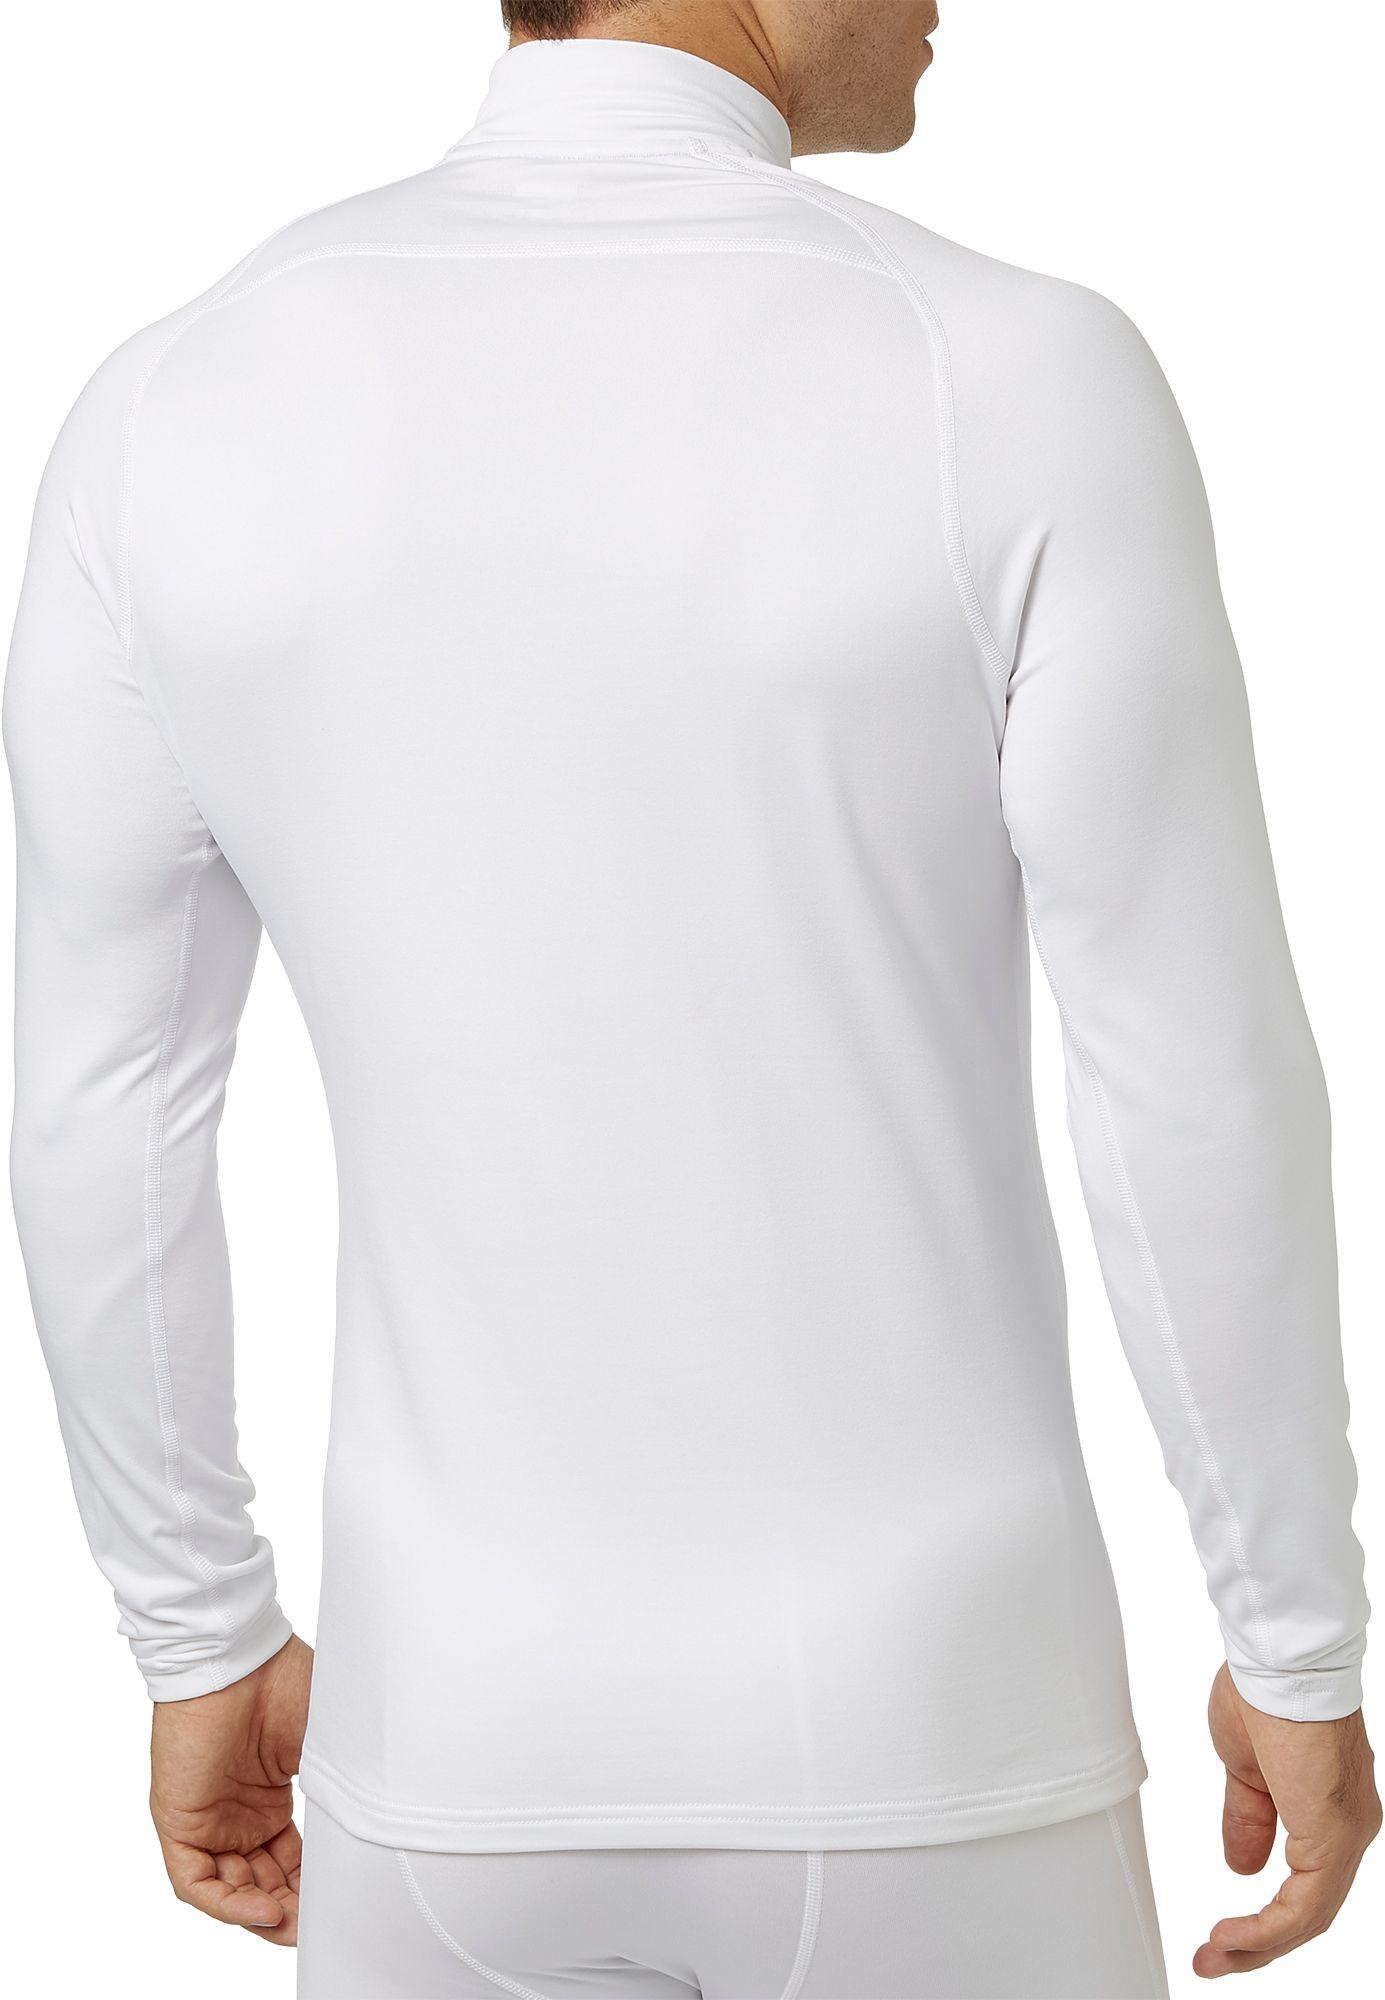 reebok men's cold weather compression mock long sleeve shirt